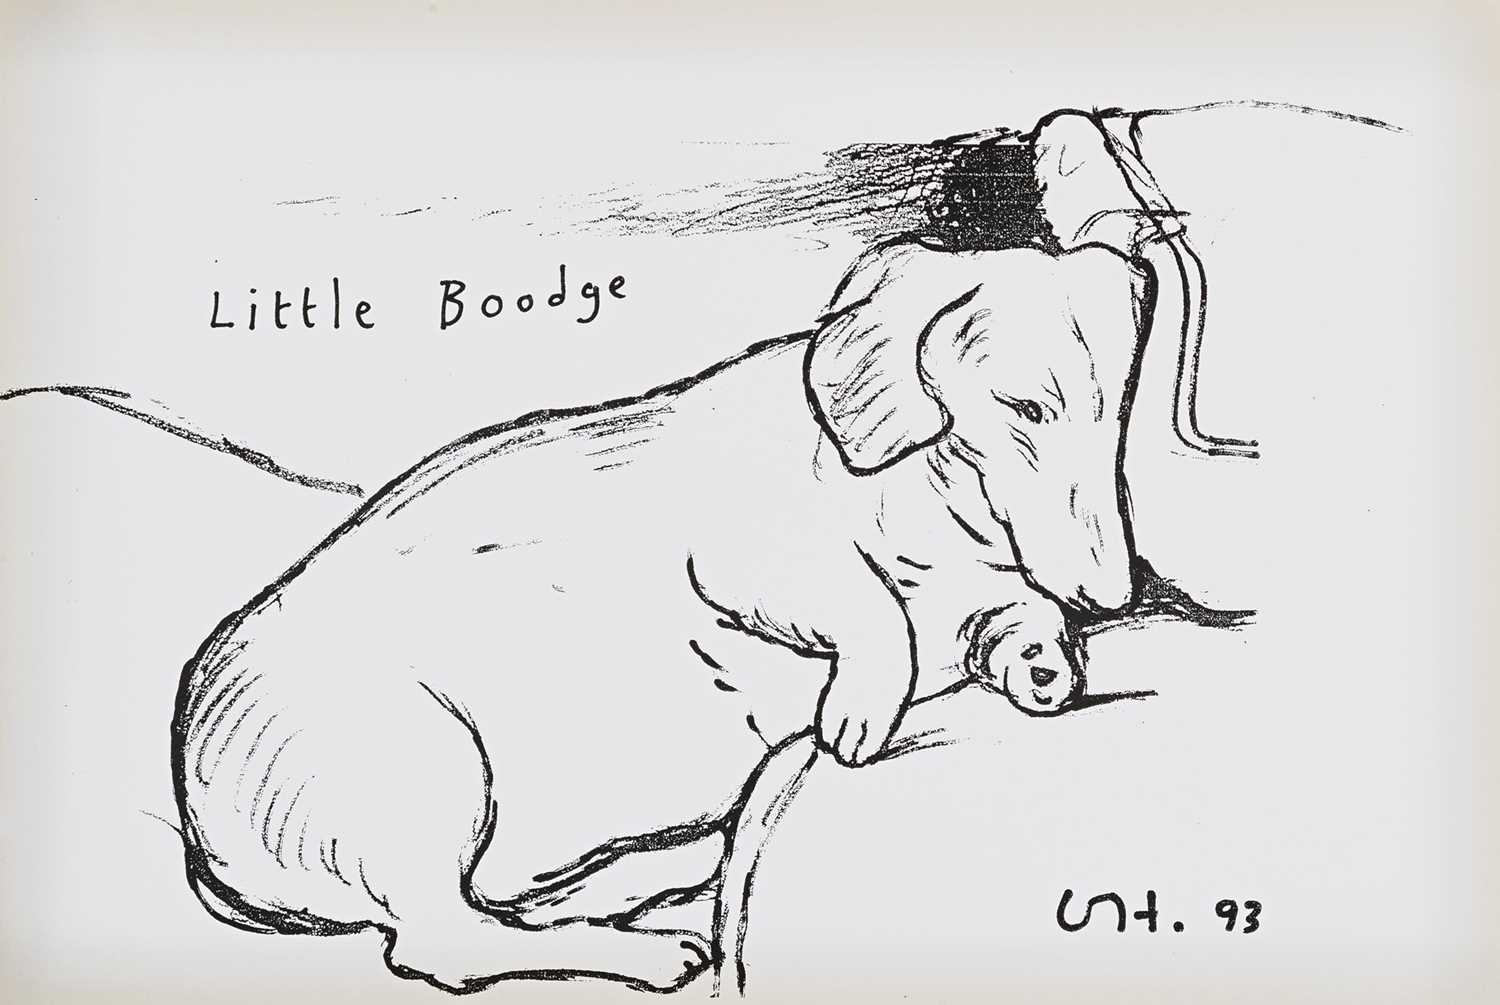 Lot 37 - David Hockney (British 1937-), 'Little Boodge' 1993